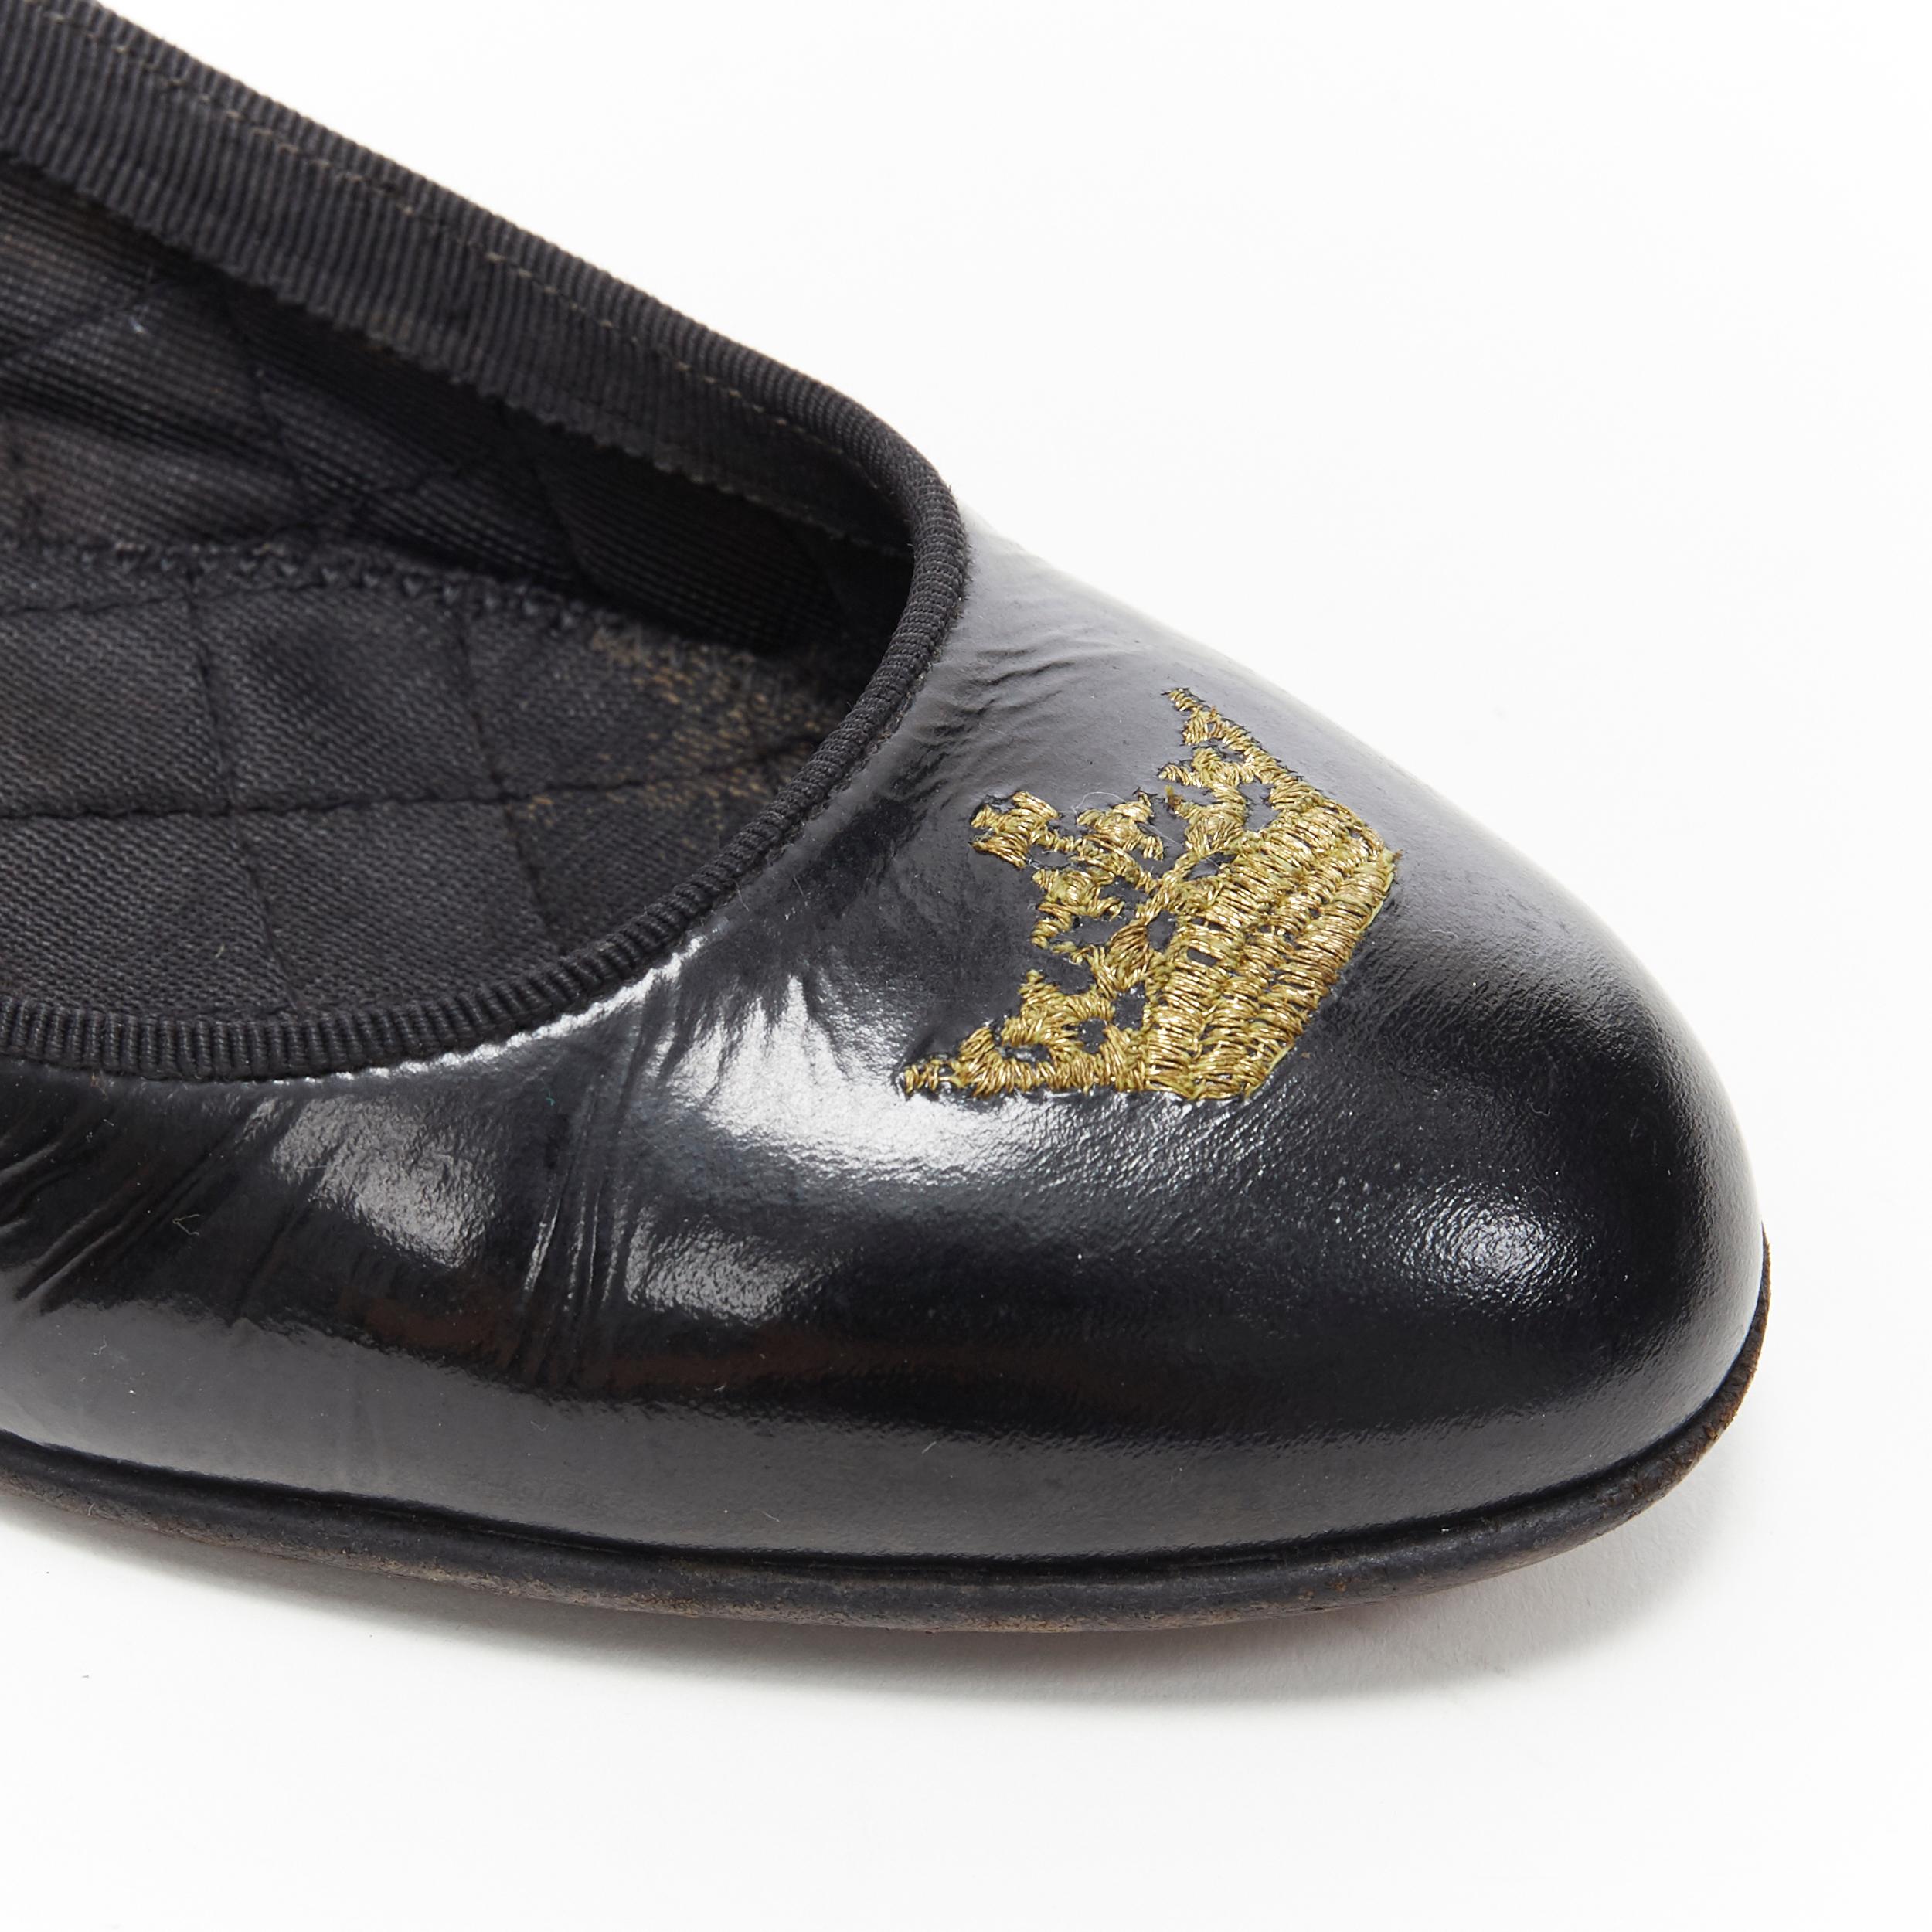 CHURCHS gold crown embroidery black patent round toe flats EU37 1